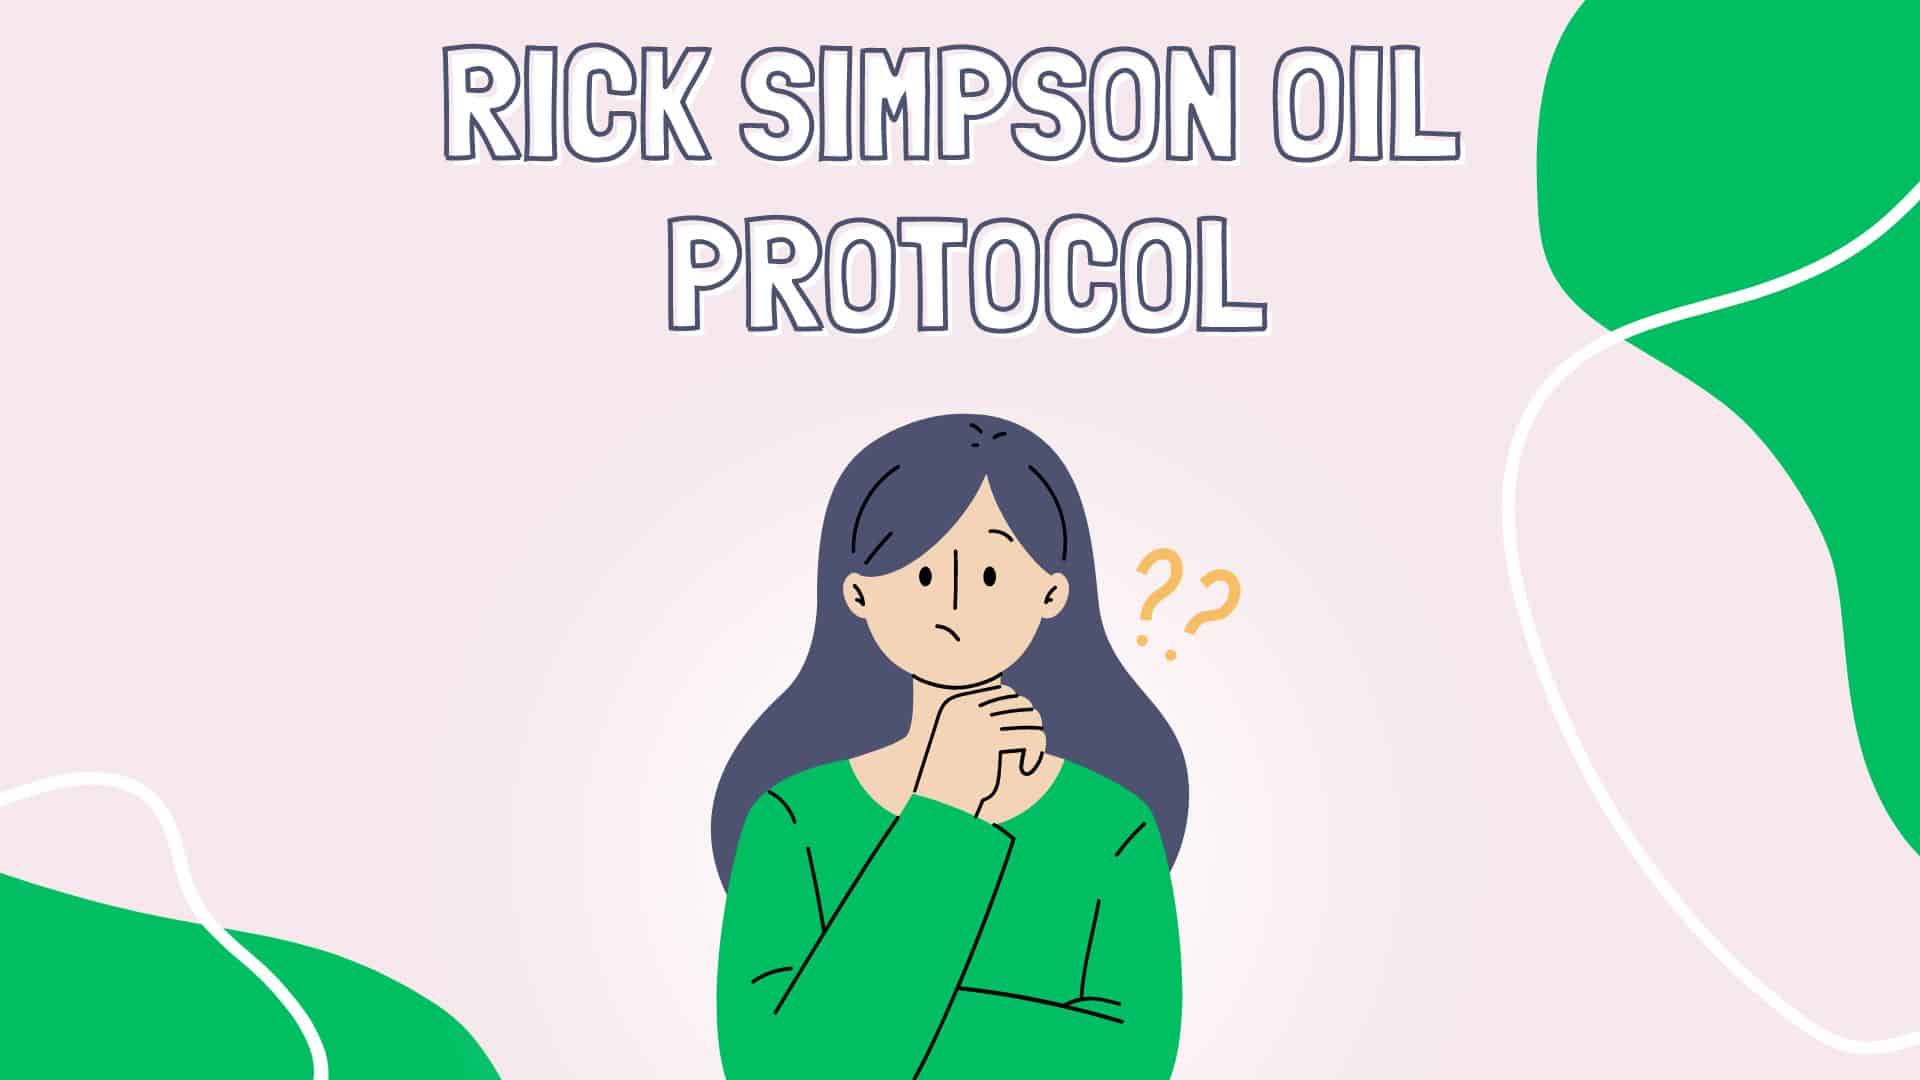 Rick Simpson Oil Protocol